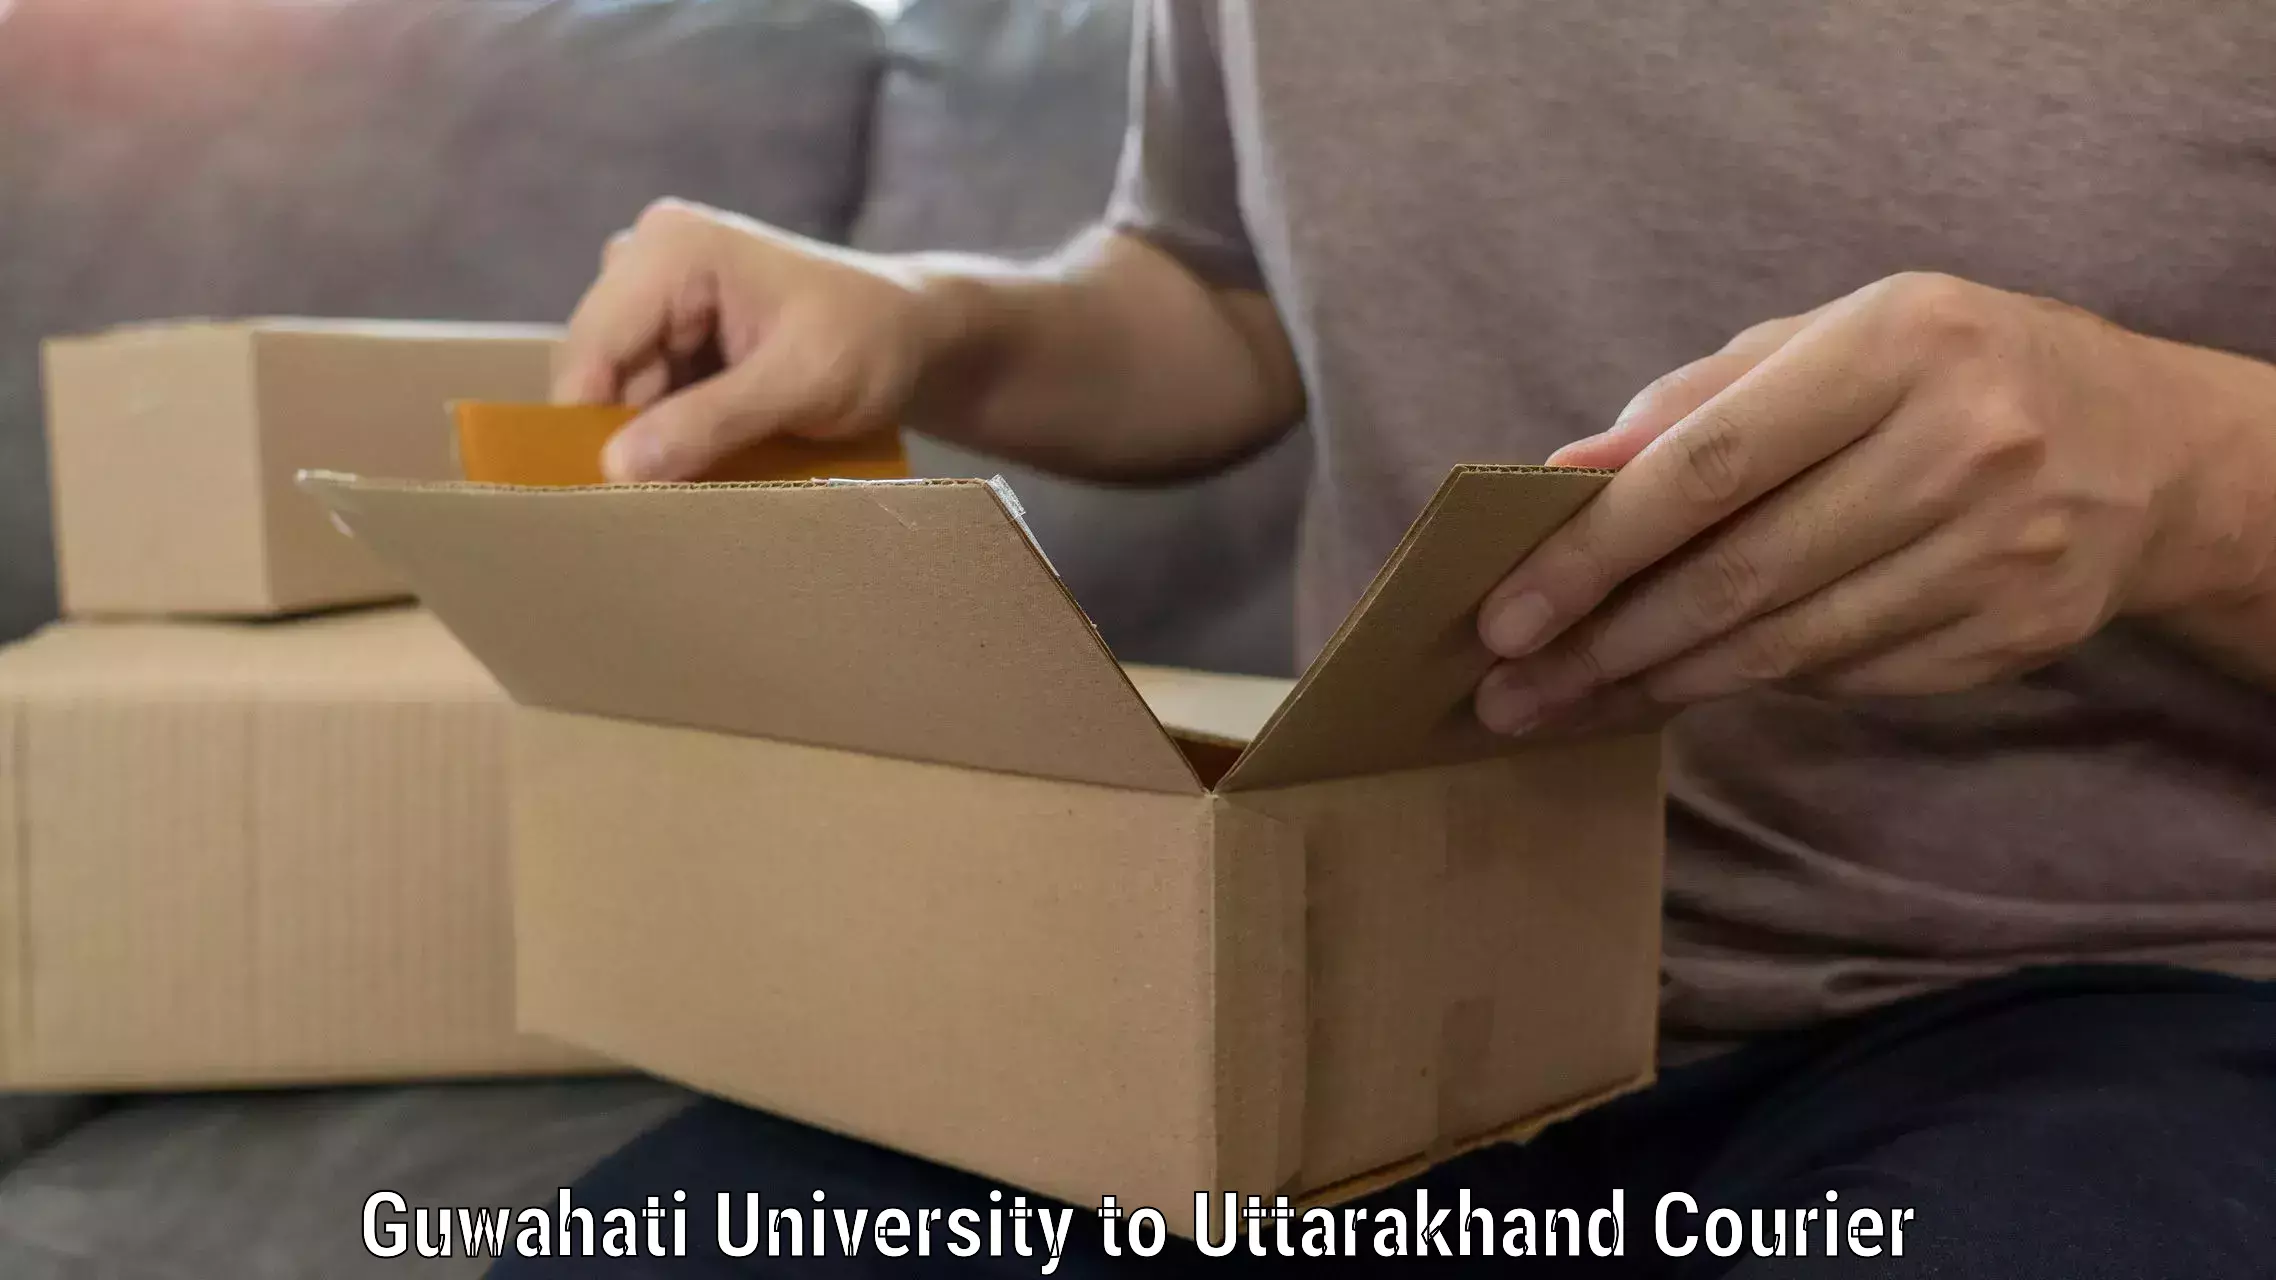 Skilled furniture movers Guwahati University to Uttarakhand